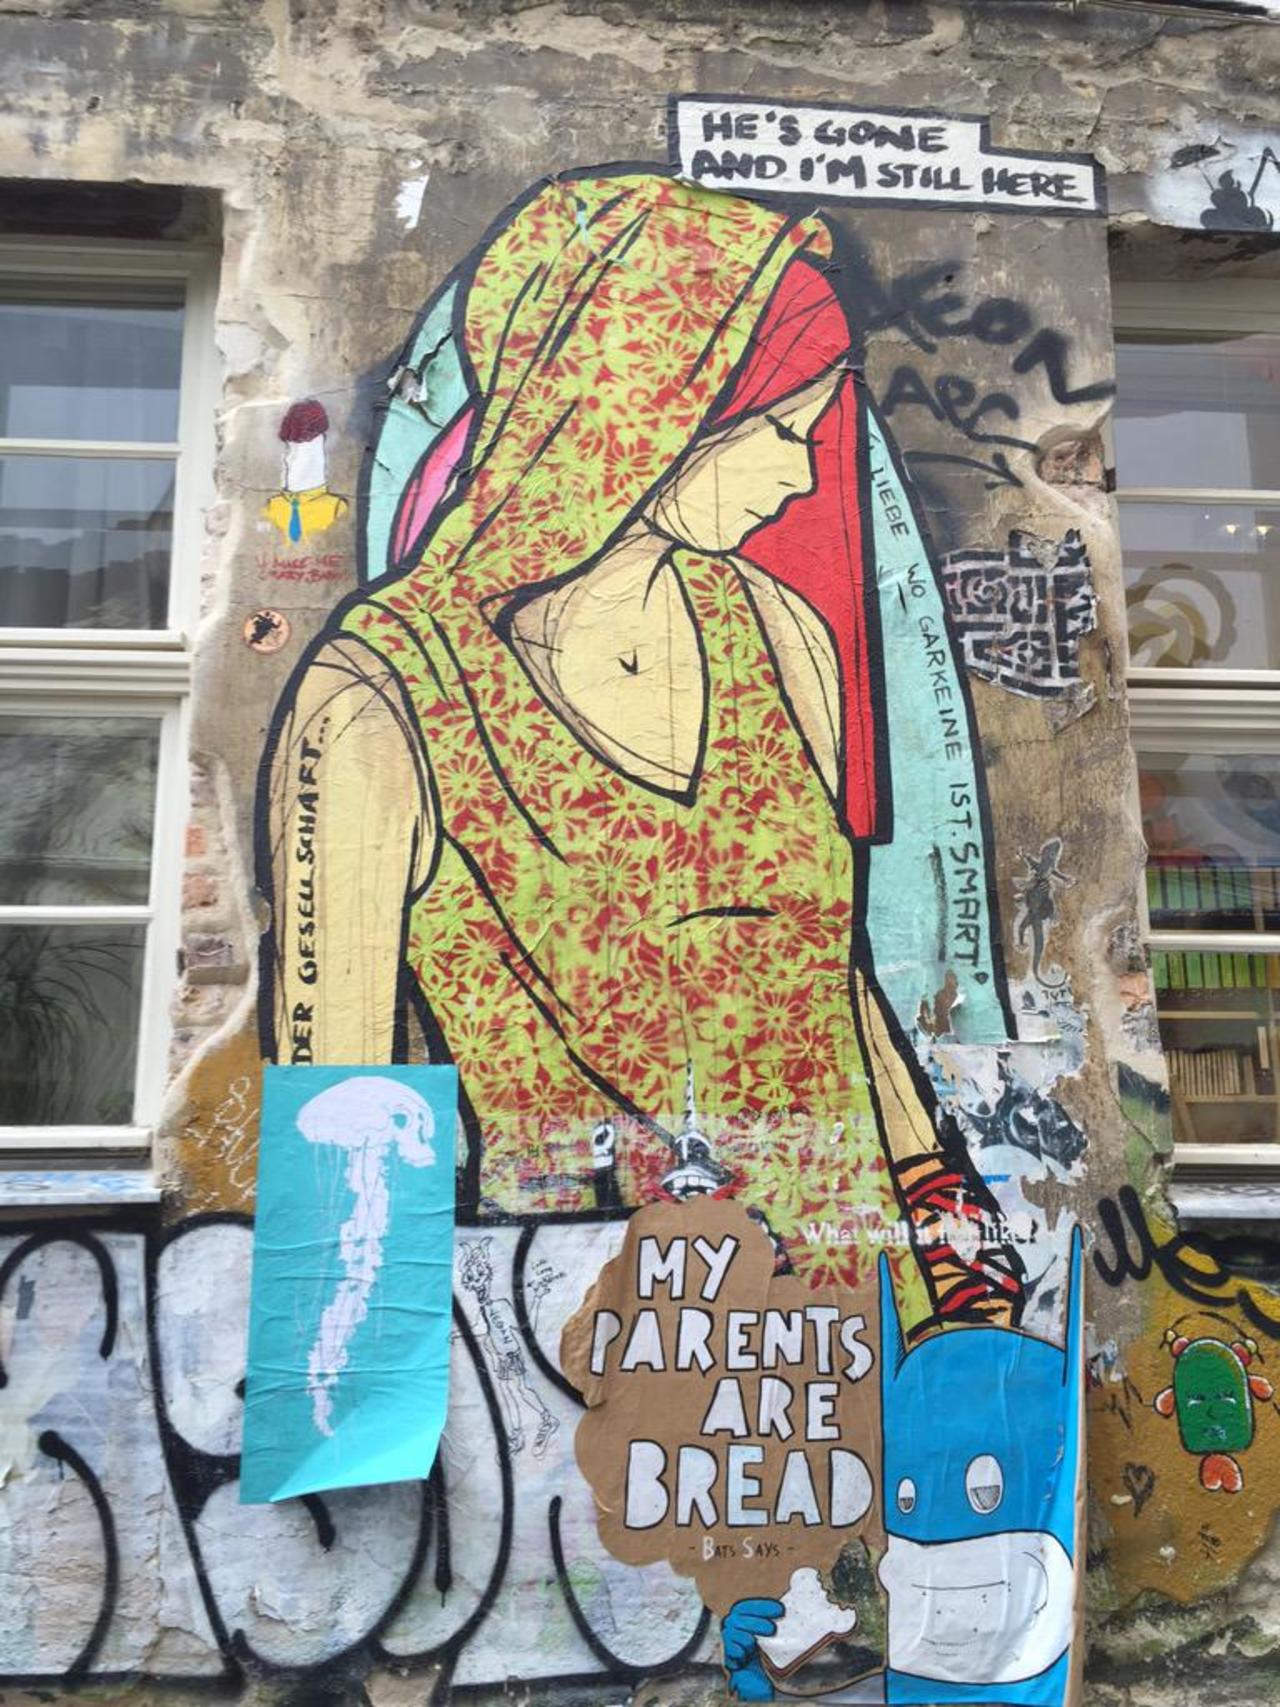 if you love #streetart, 
then you will love #Berlin
this city is incredible
#graffiti #art #urbanart http://t.co/wFfMElWbLI